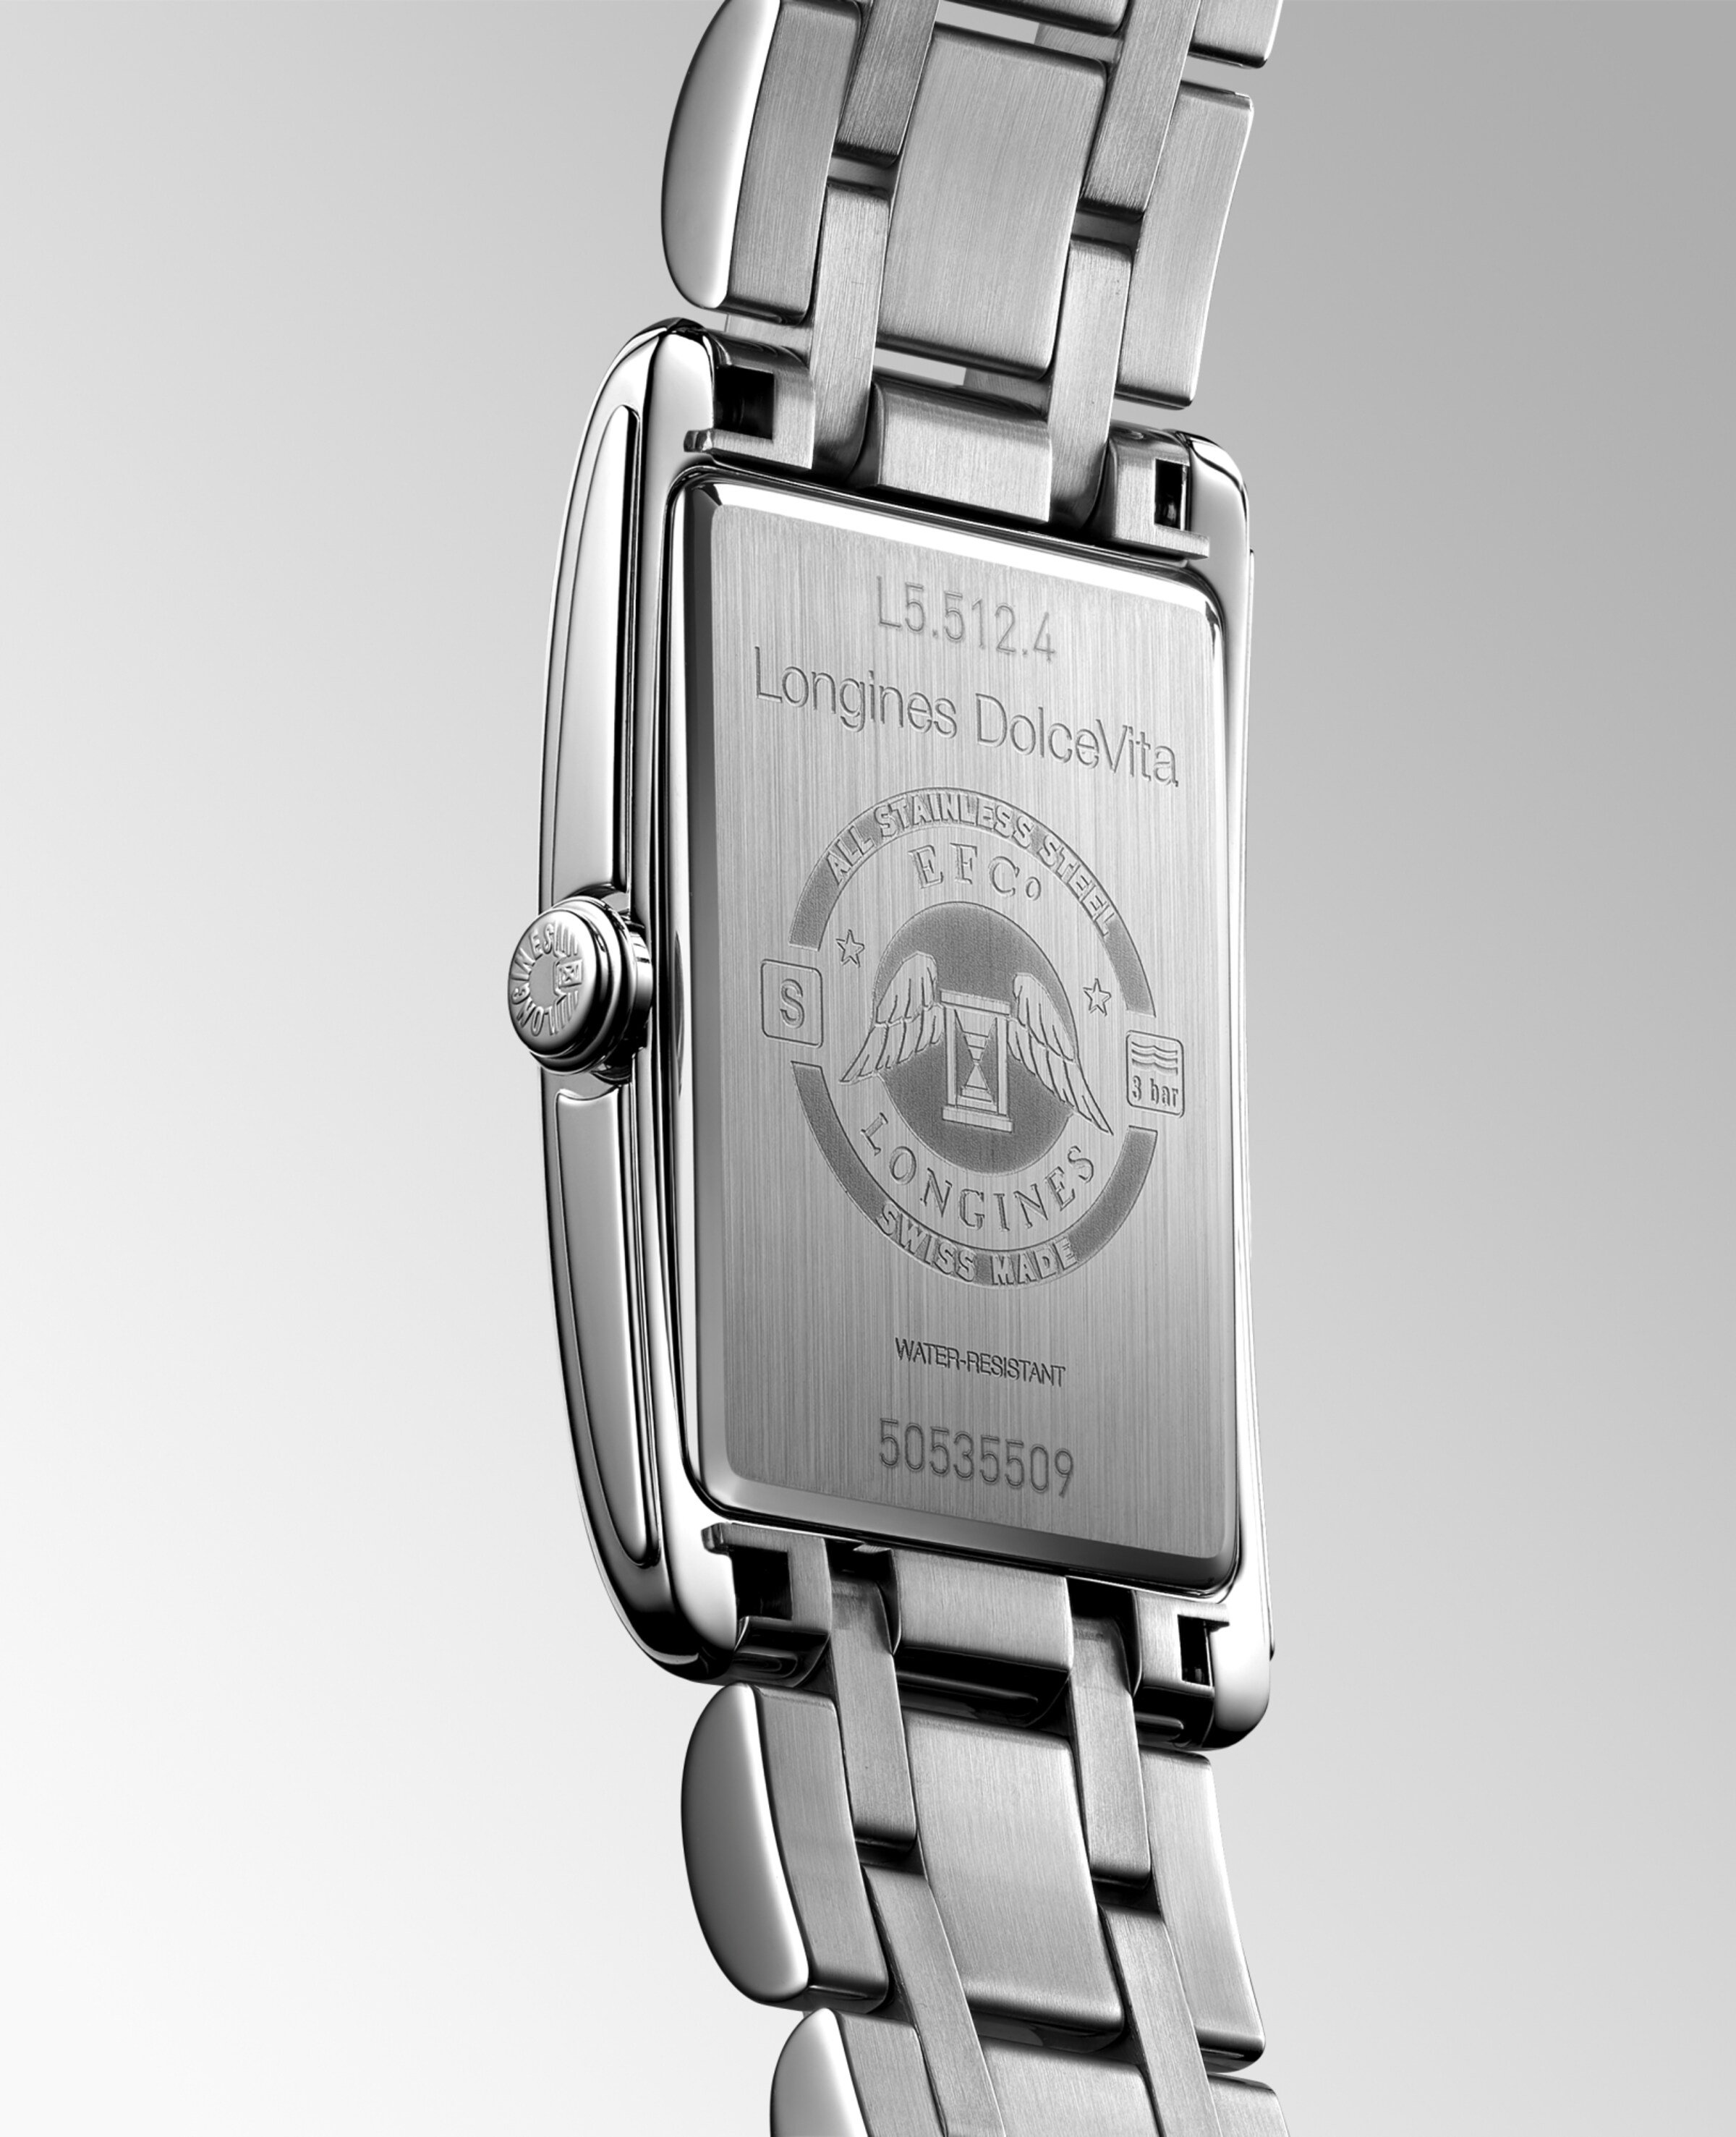 Longines DOLCEVITA Quartz Stainless steel Watch - L5.512.4.93.6